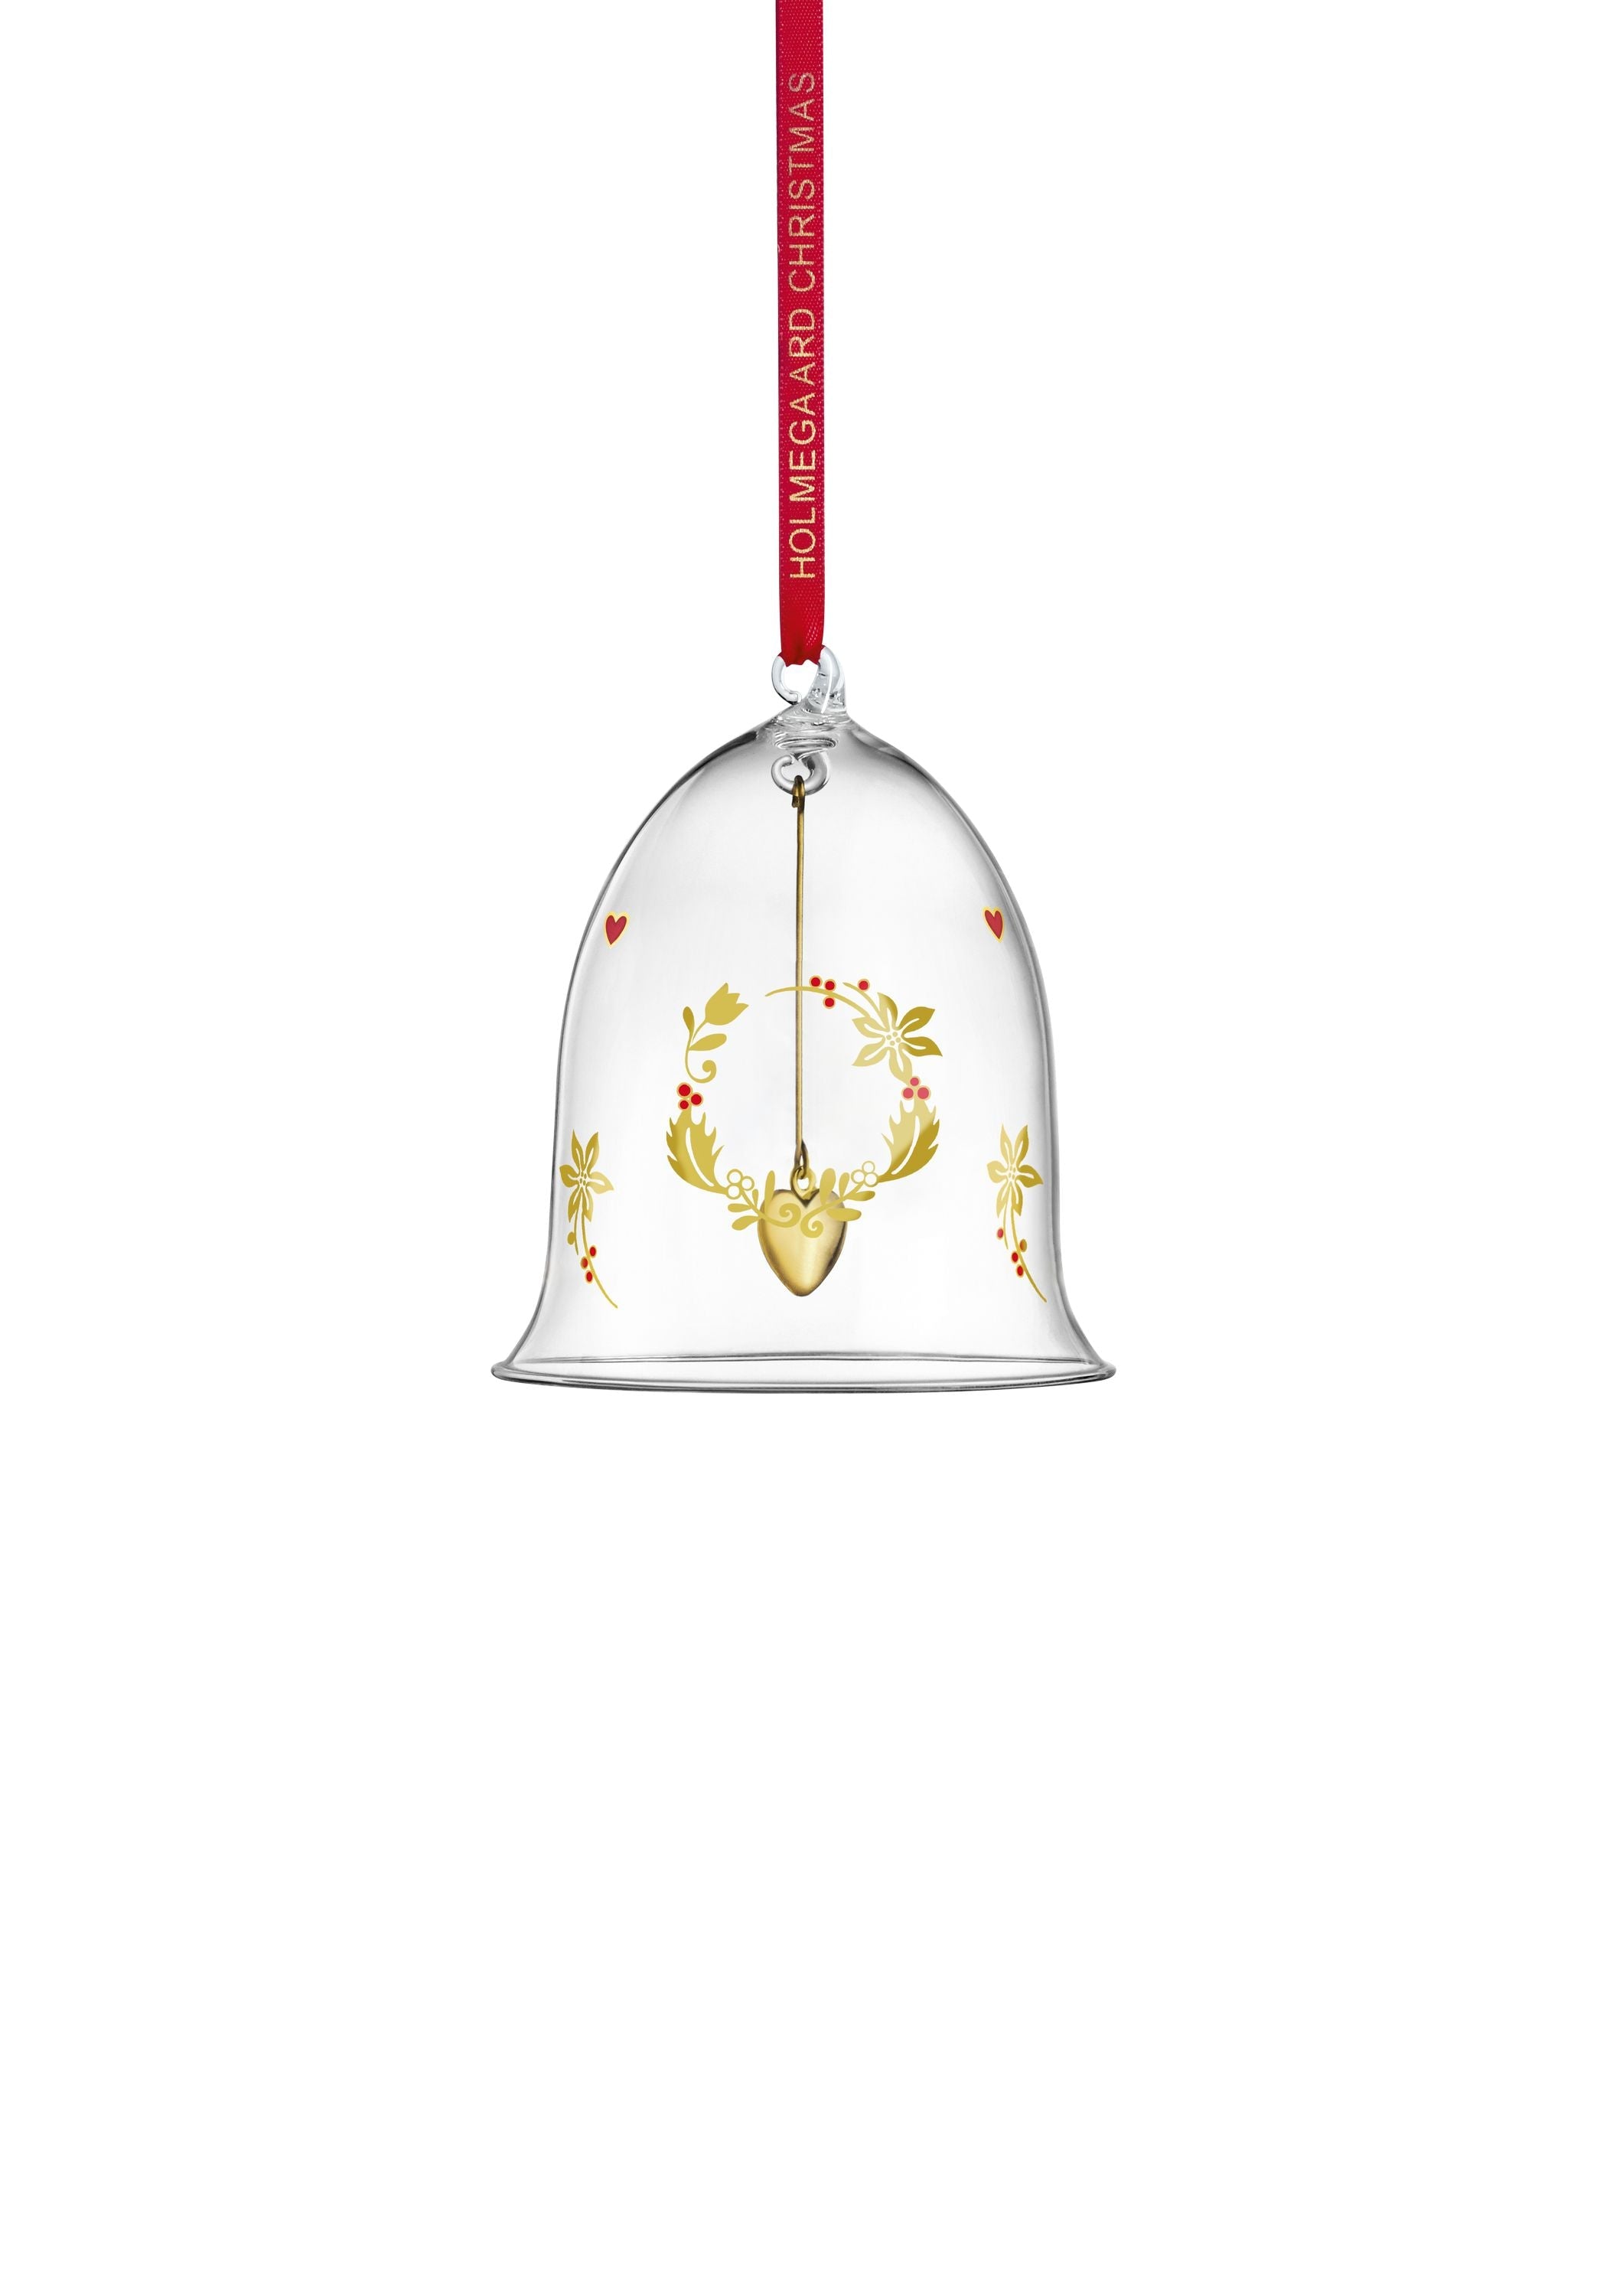 Holmegaard Ann Sofi Romme Doroczny Bell Bell 2023, duży